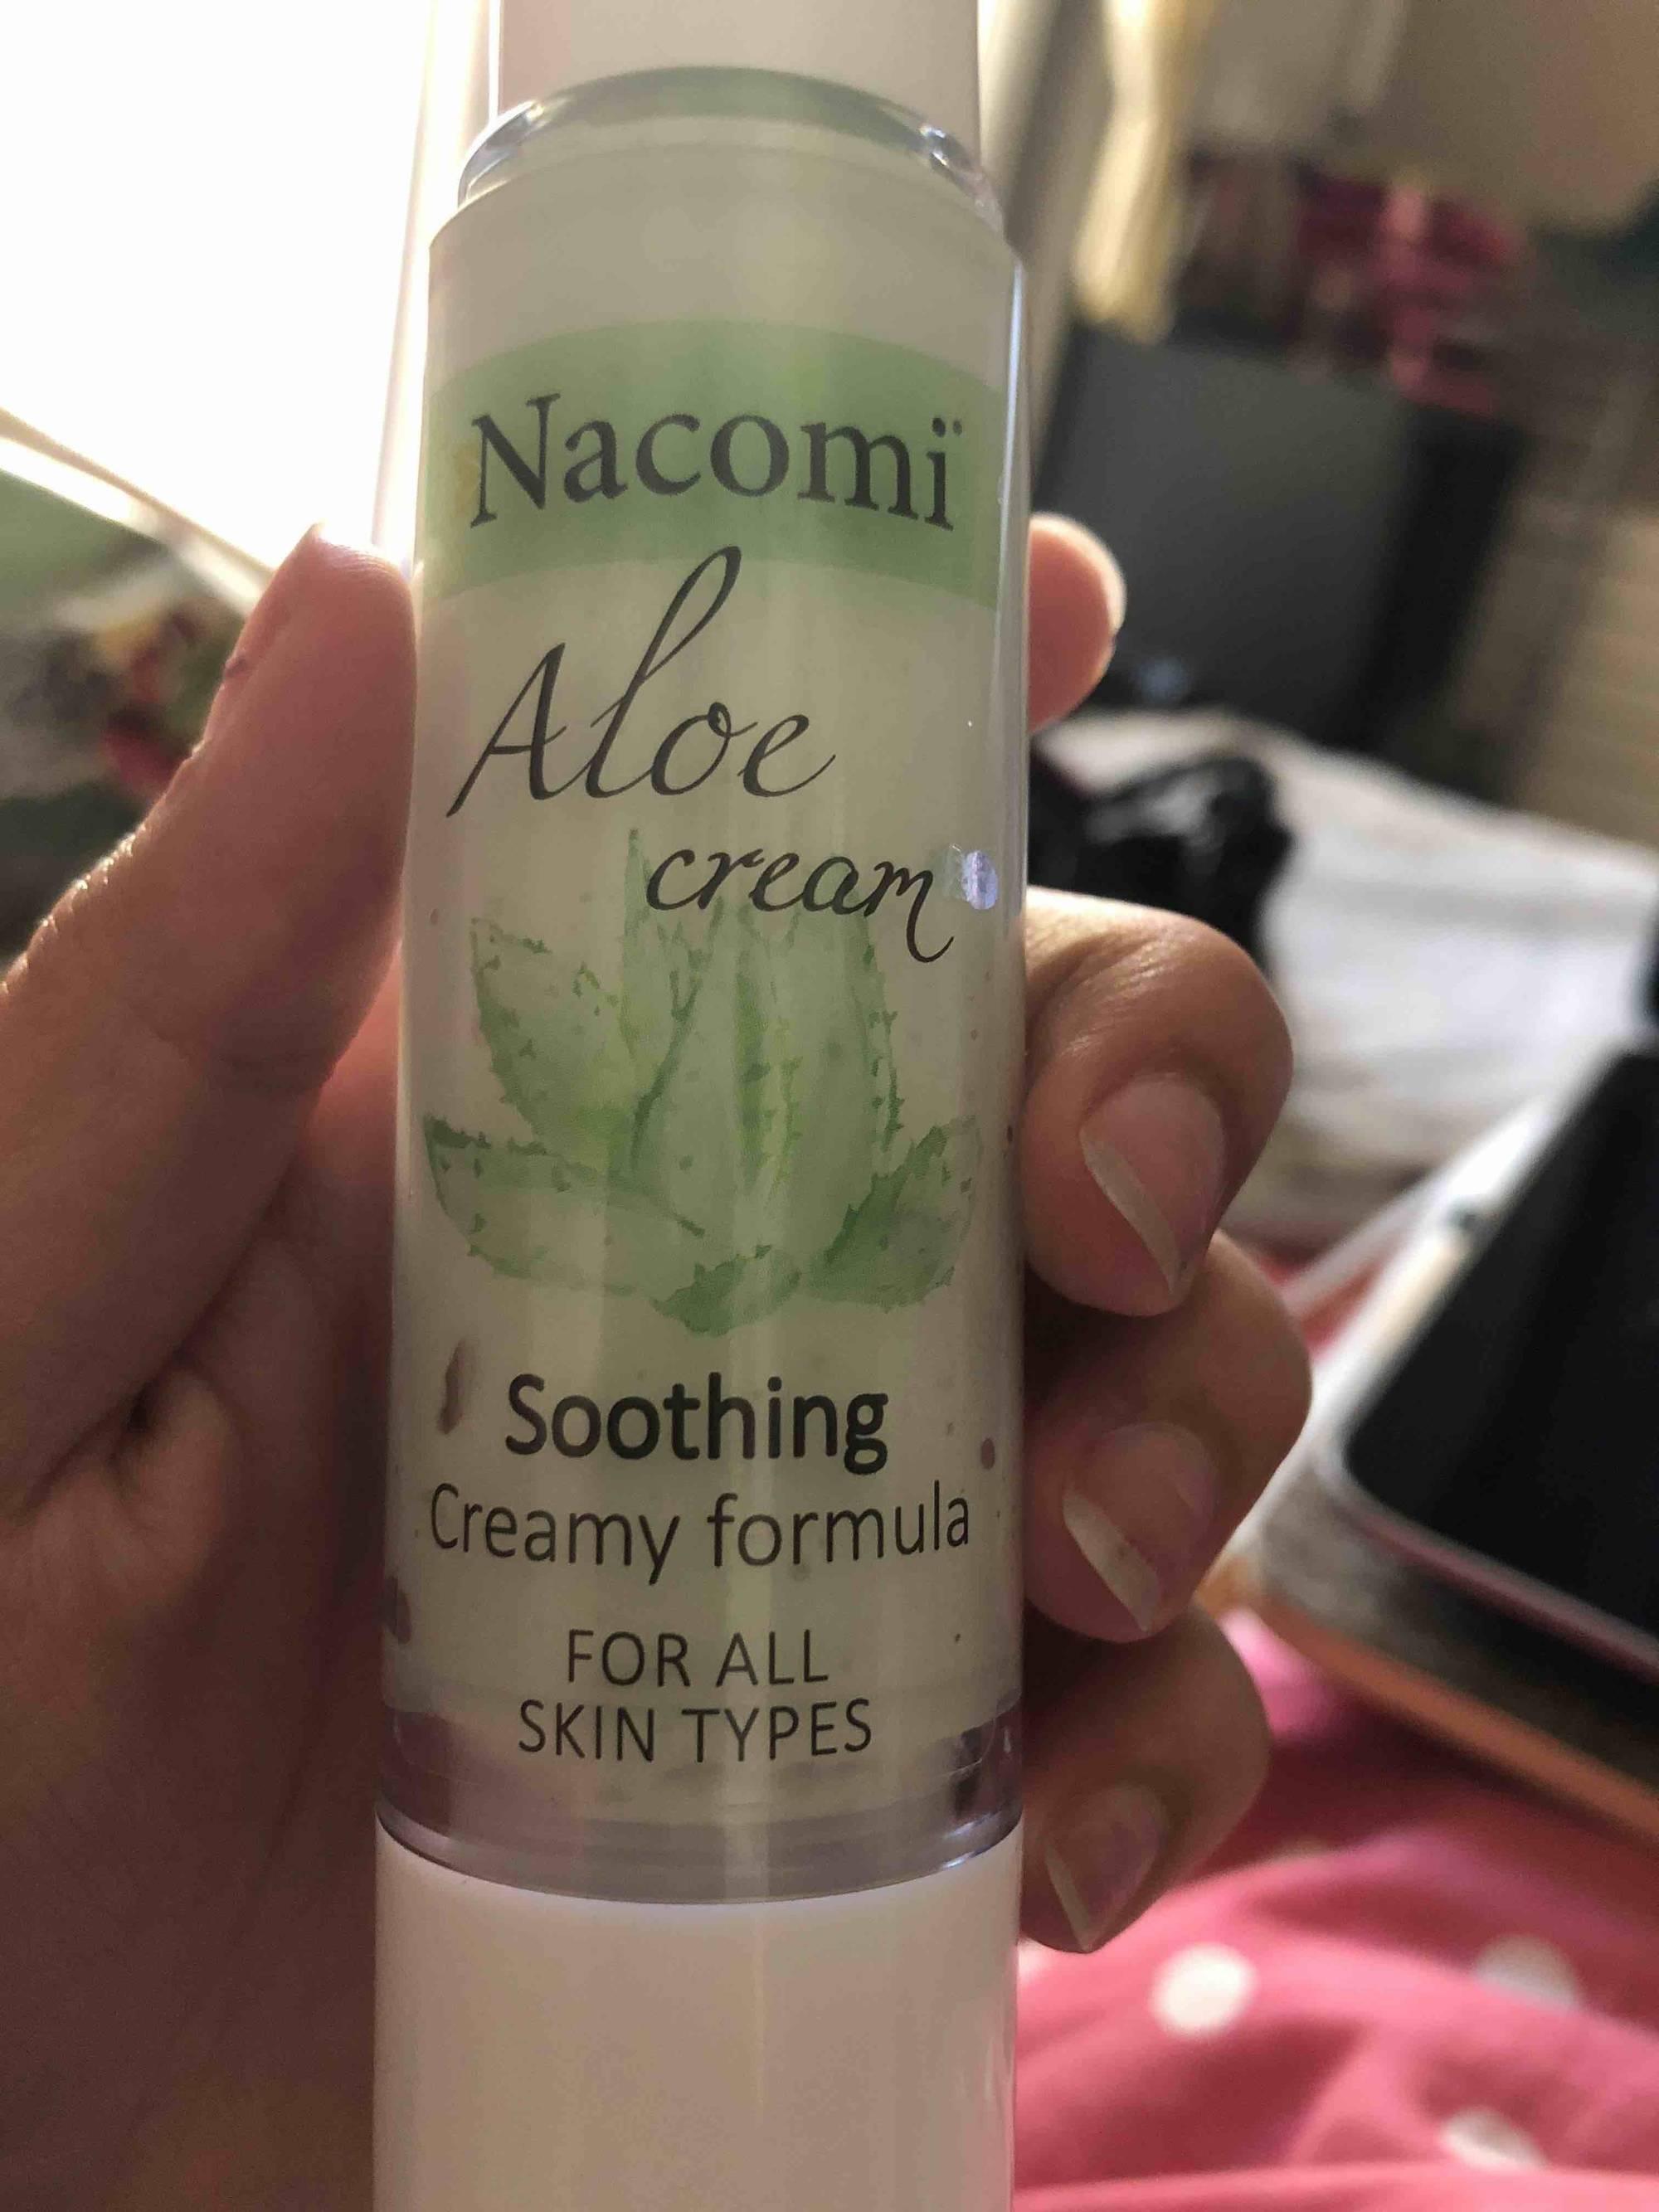 NACOMI - Aloe cream - Soothing creamy formula